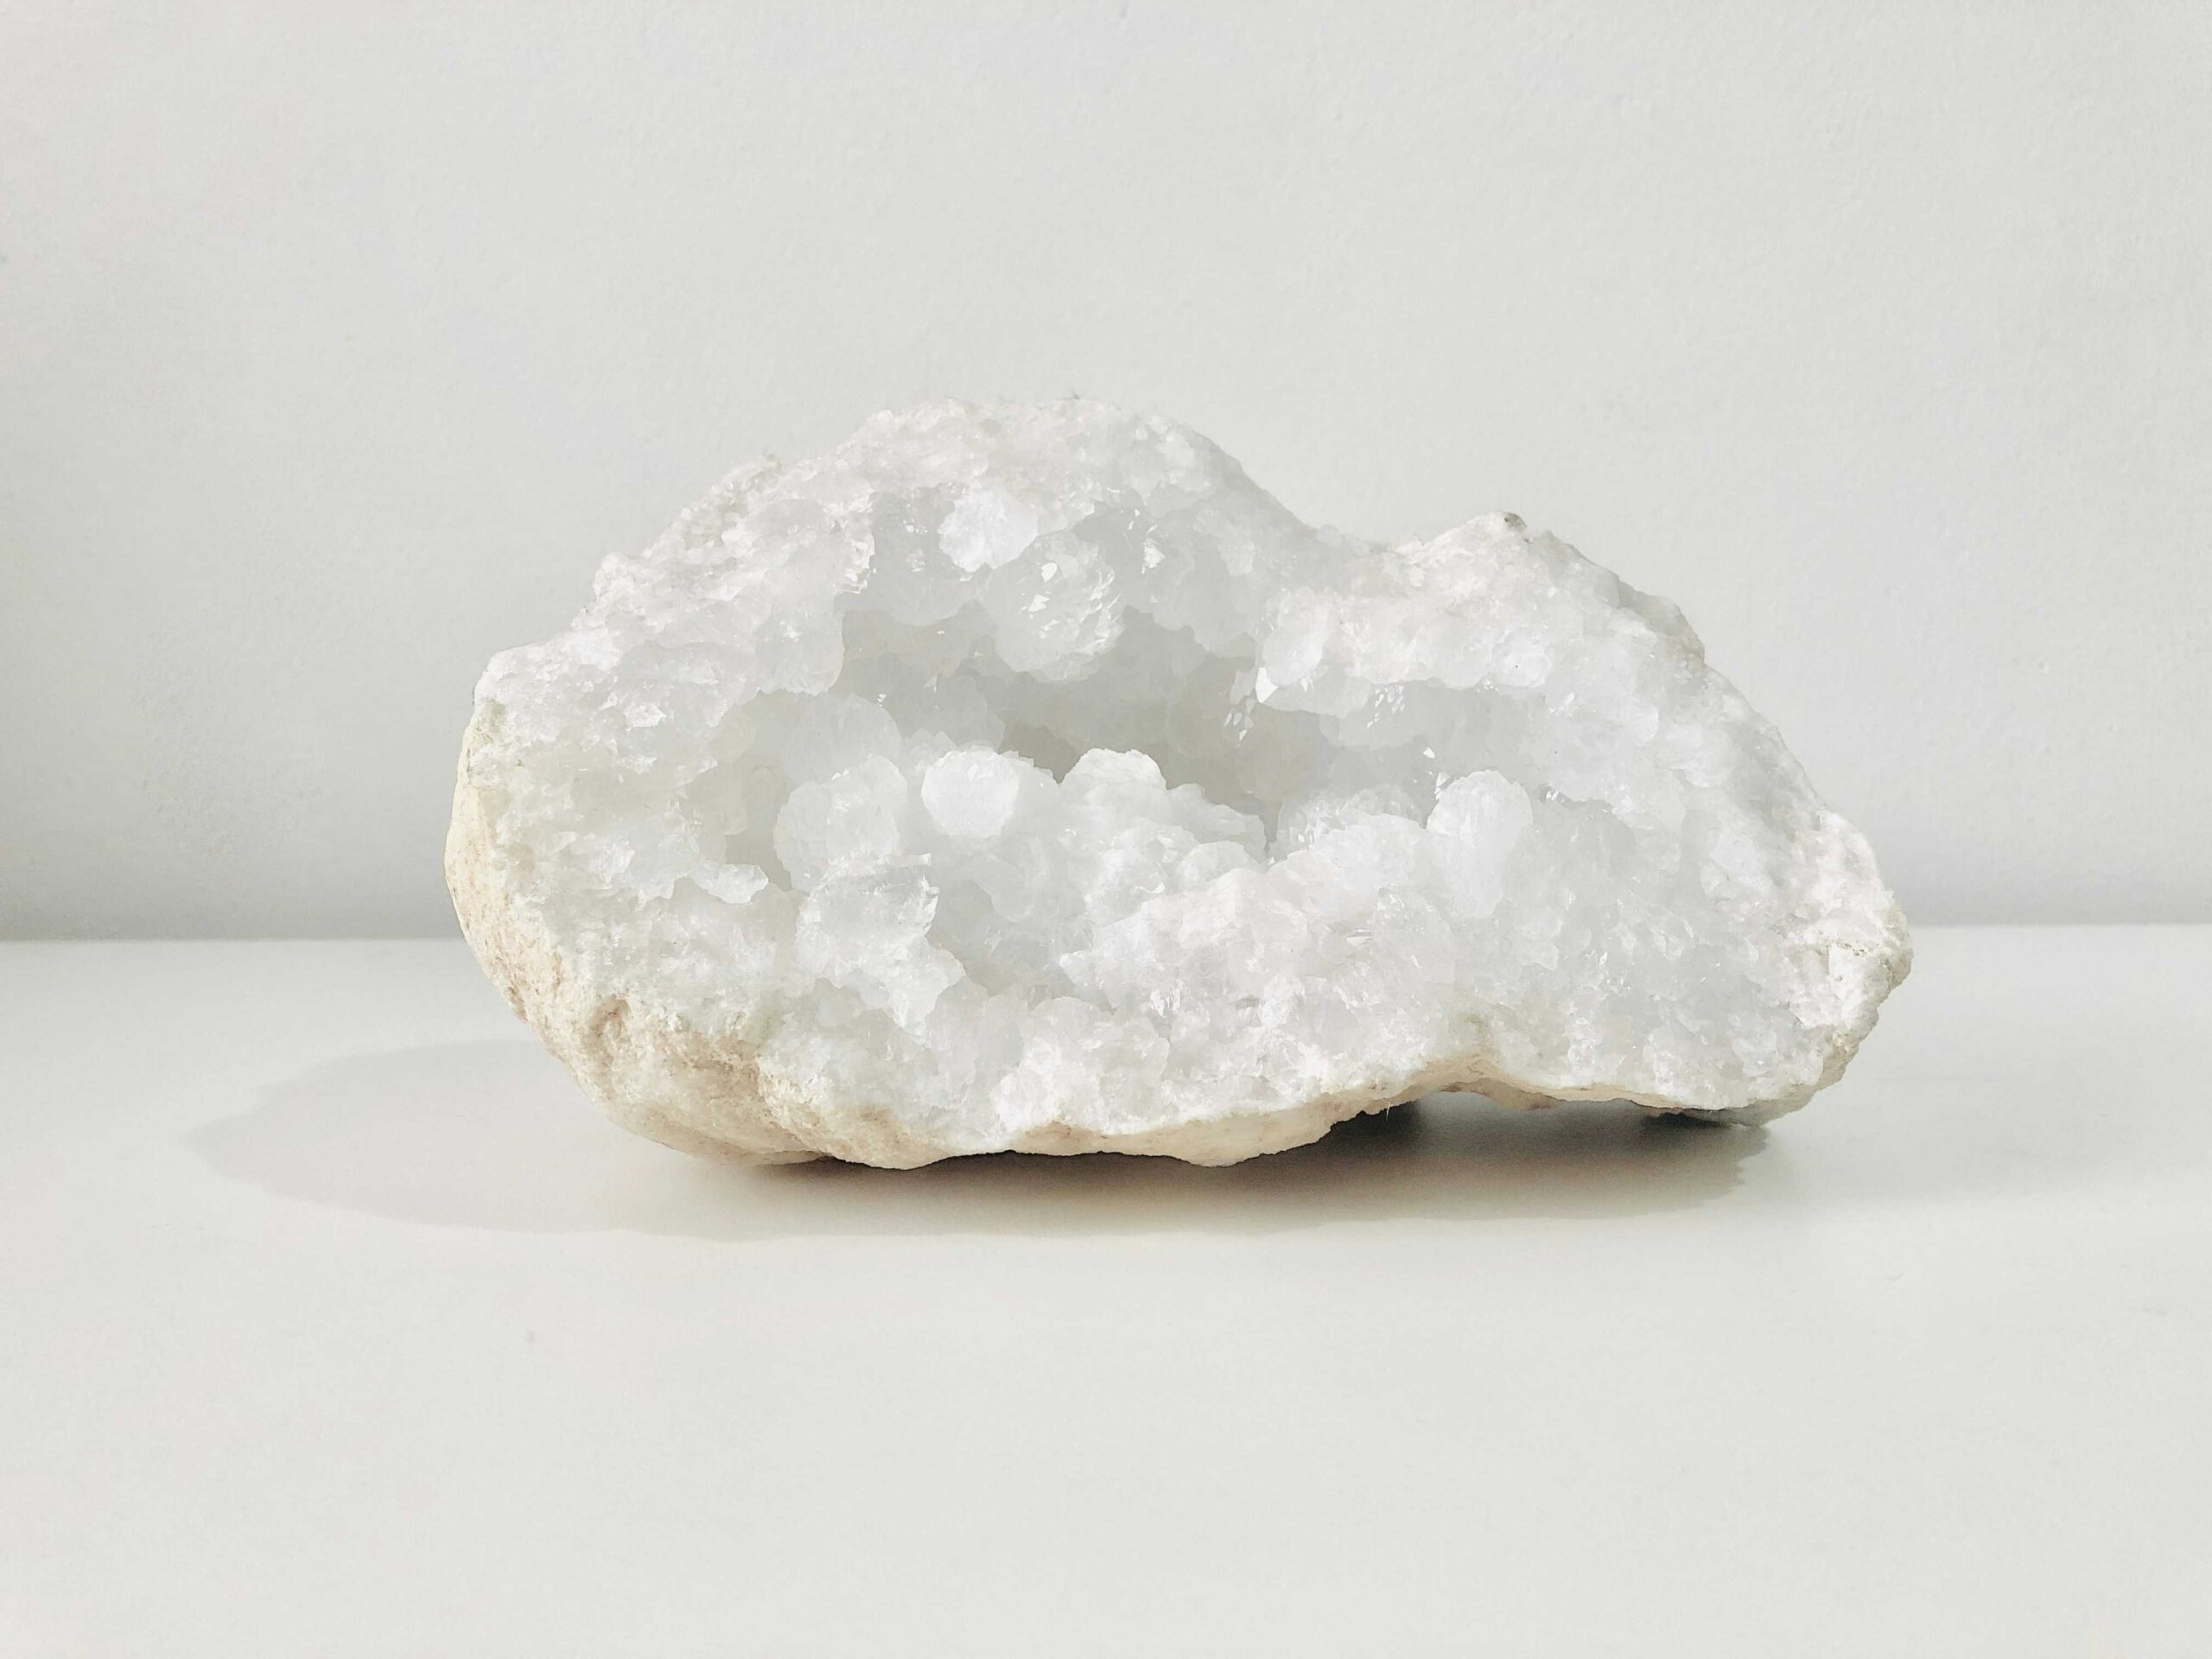 A clear quartz geode